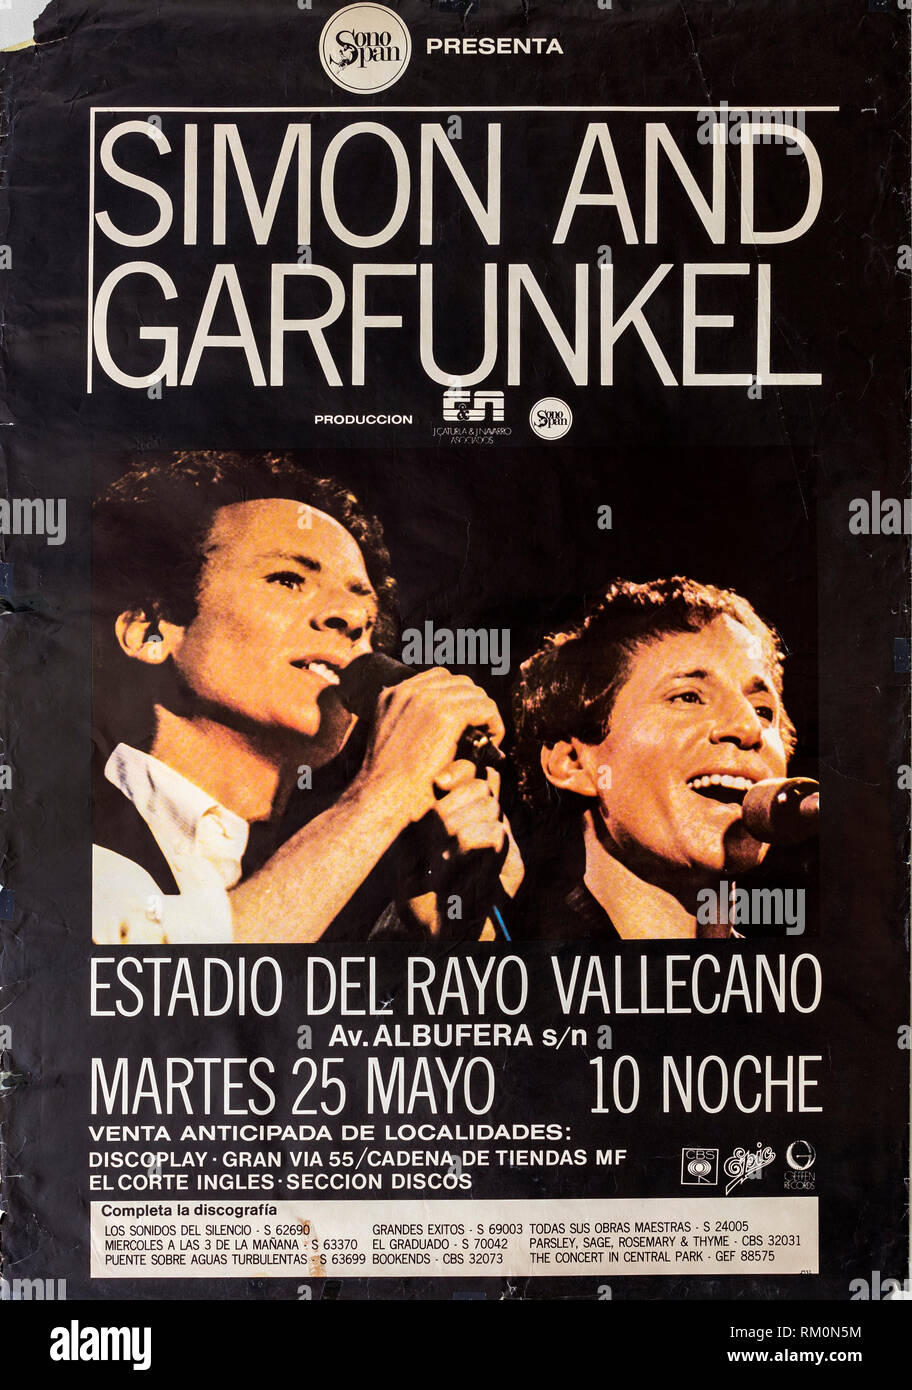 Simon and Garfunkel, Madrid Rayo Vallecano 1982 tour, concerto musicale poster Foto Stock